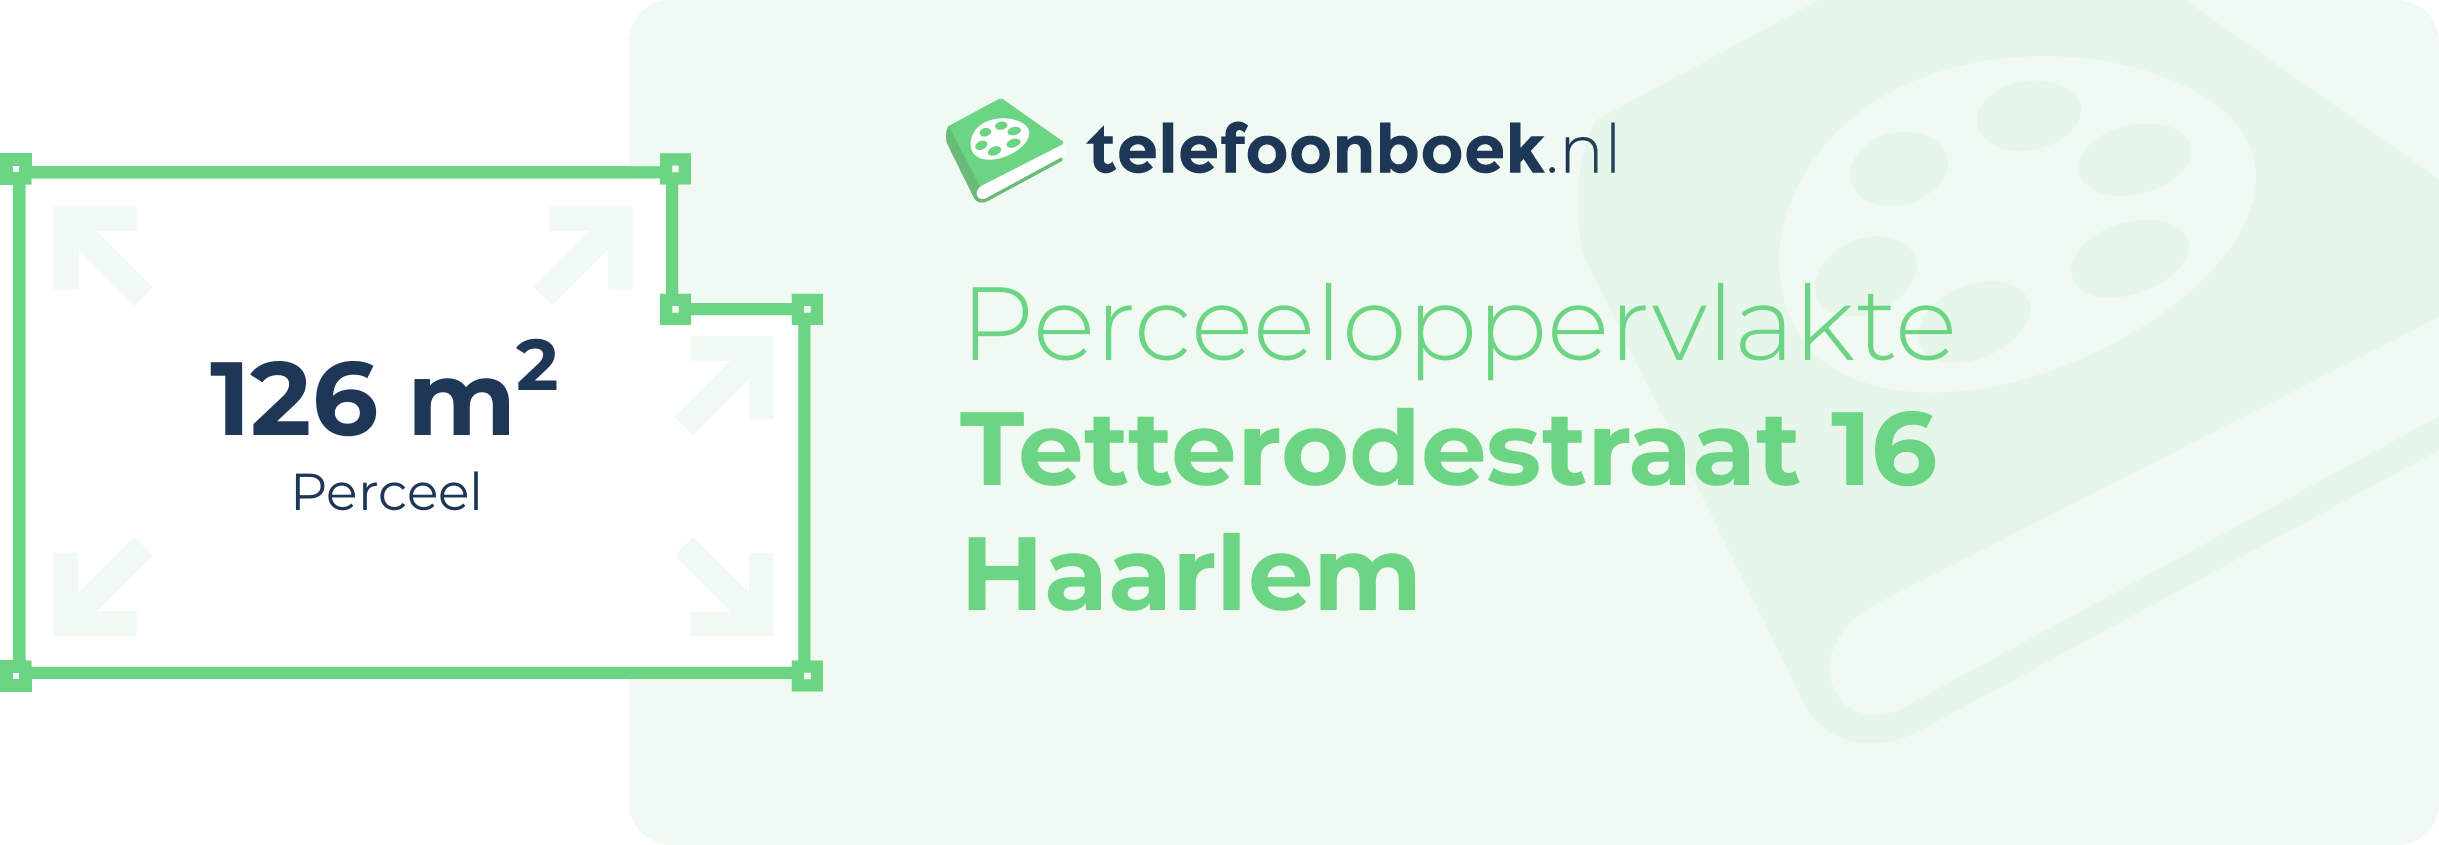 Perceeloppervlakte Tetterodestraat 16 Haarlem